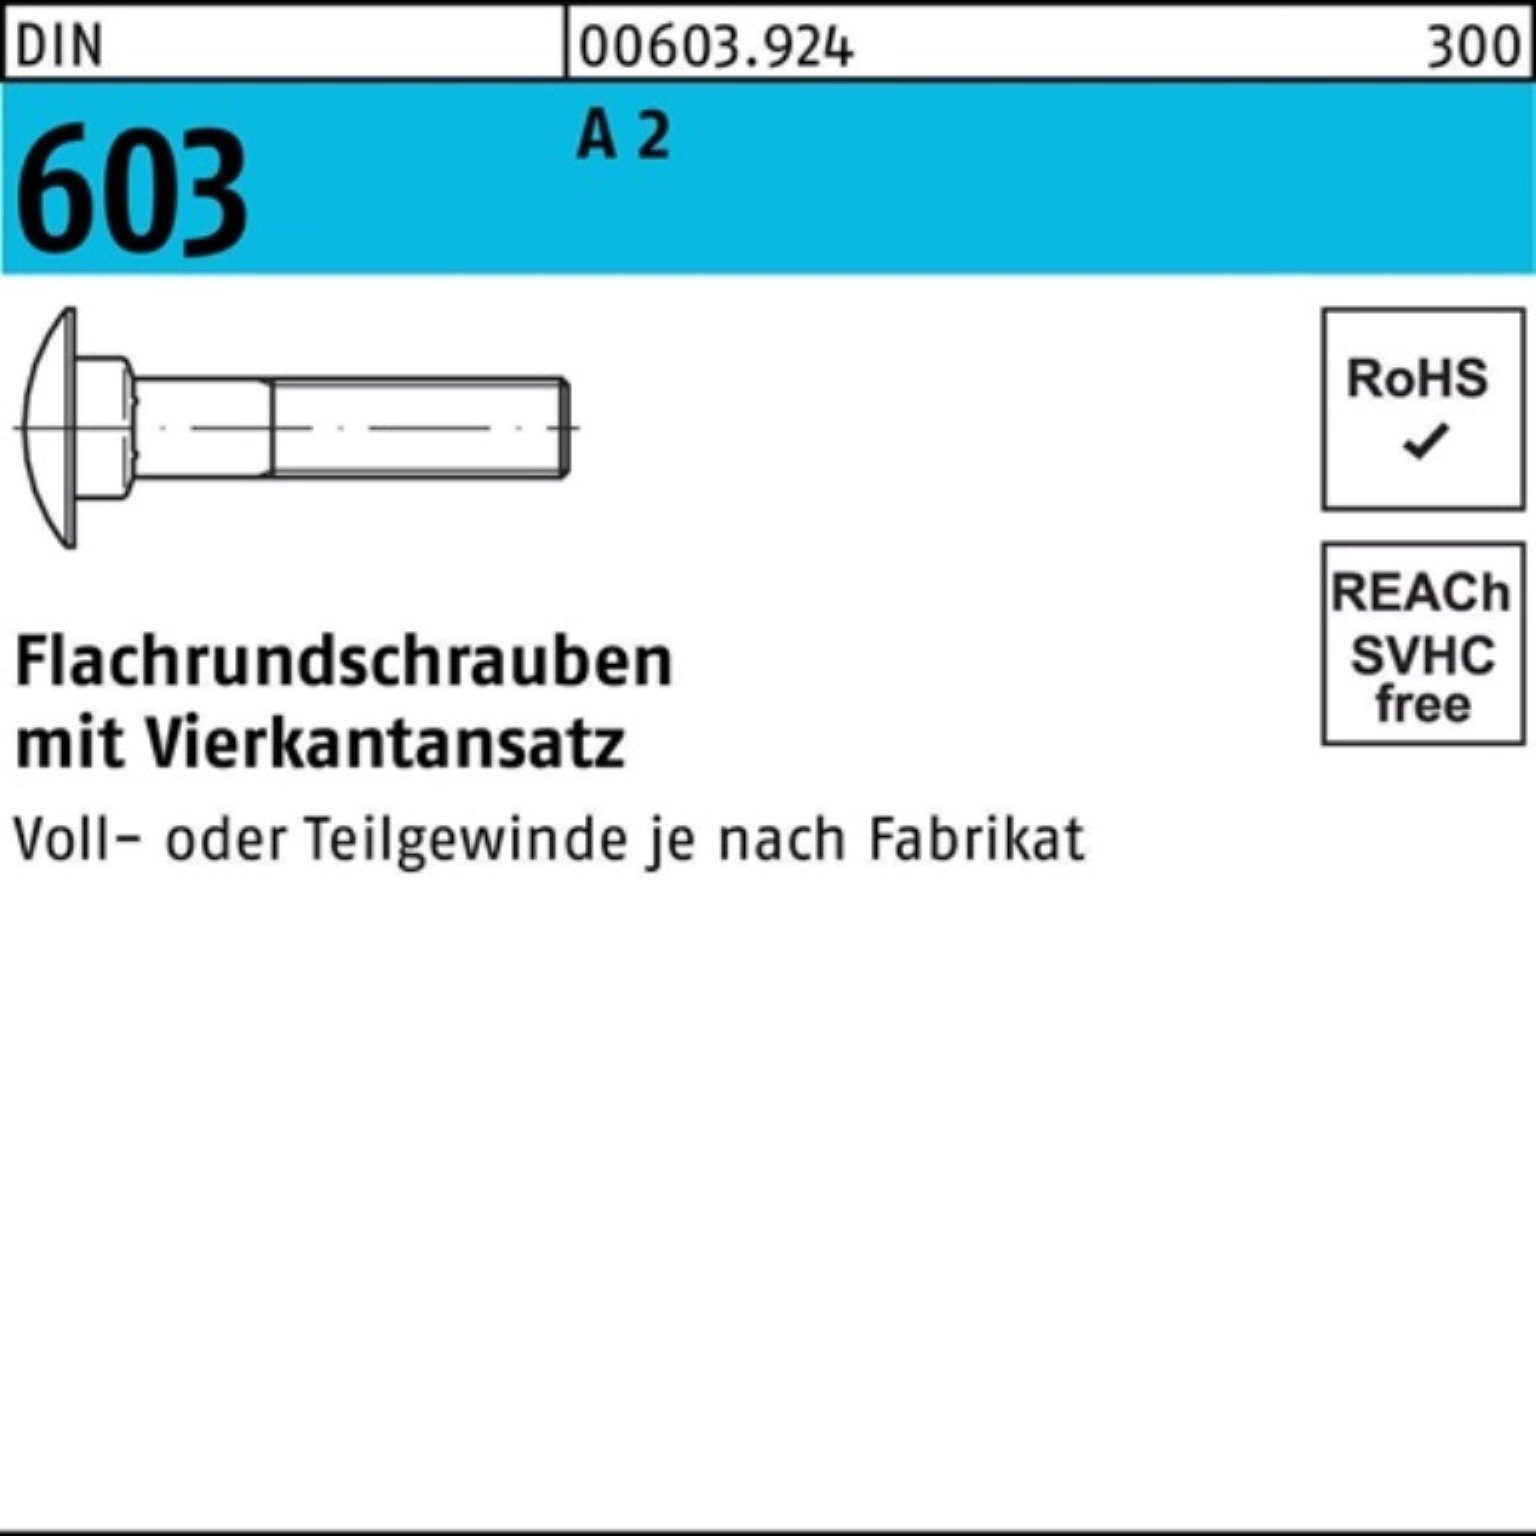 Reyher Schraube 100er Pack Flachrundschraube 55 Vierkantansatz M8x 100 A 2 603 DIN St